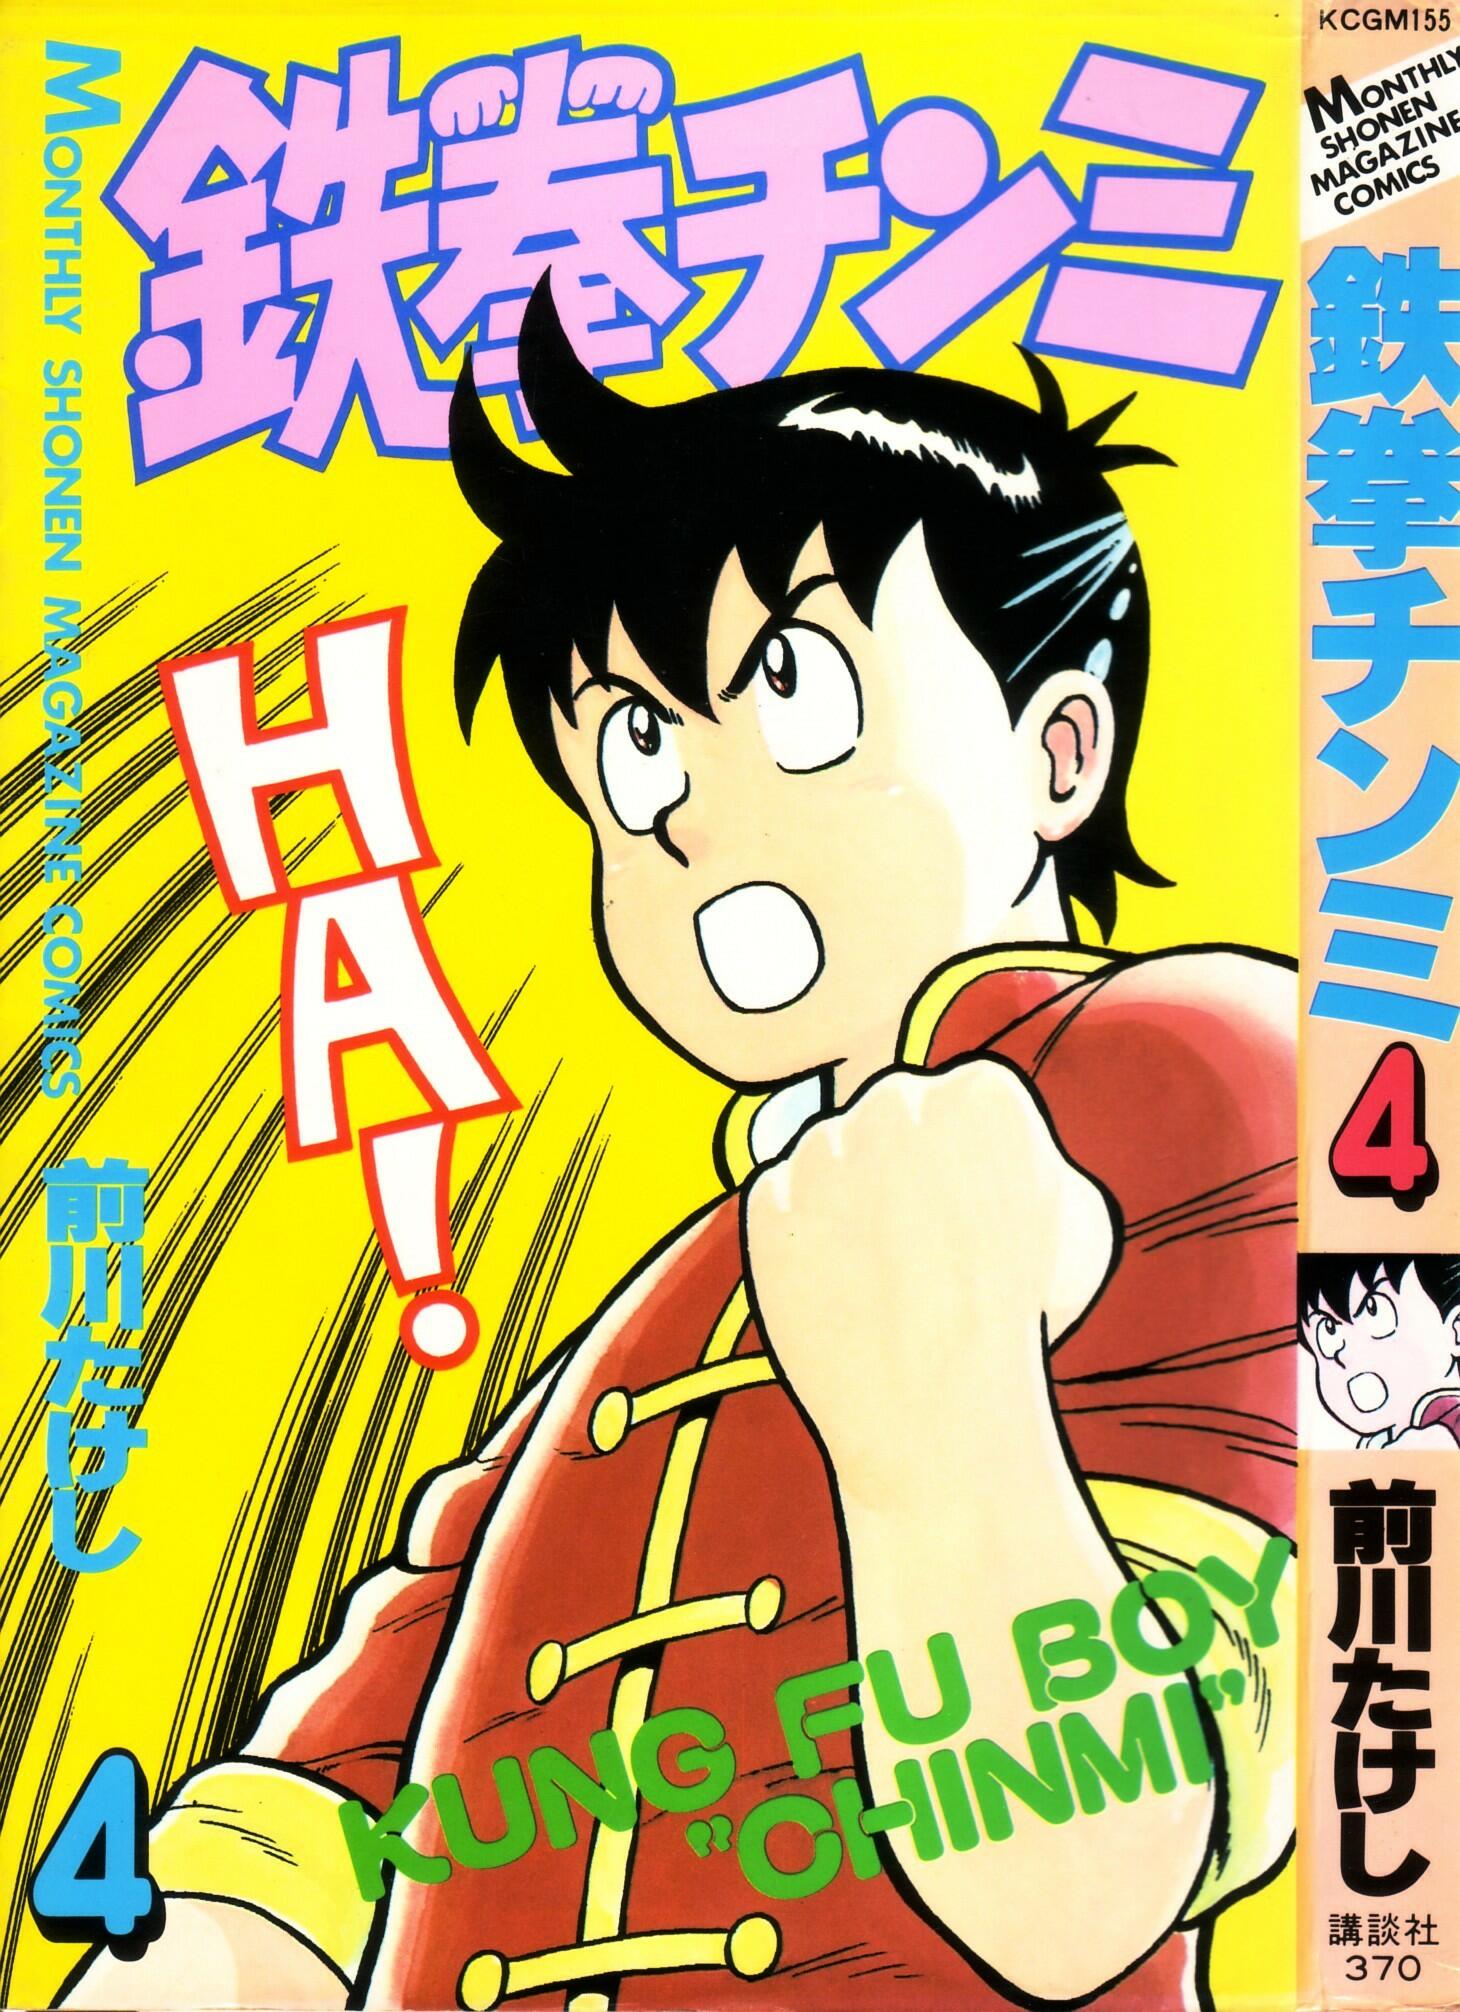 Isekai Nonbiri Nouka Vol.11 Cover; - Takeshi's News Center